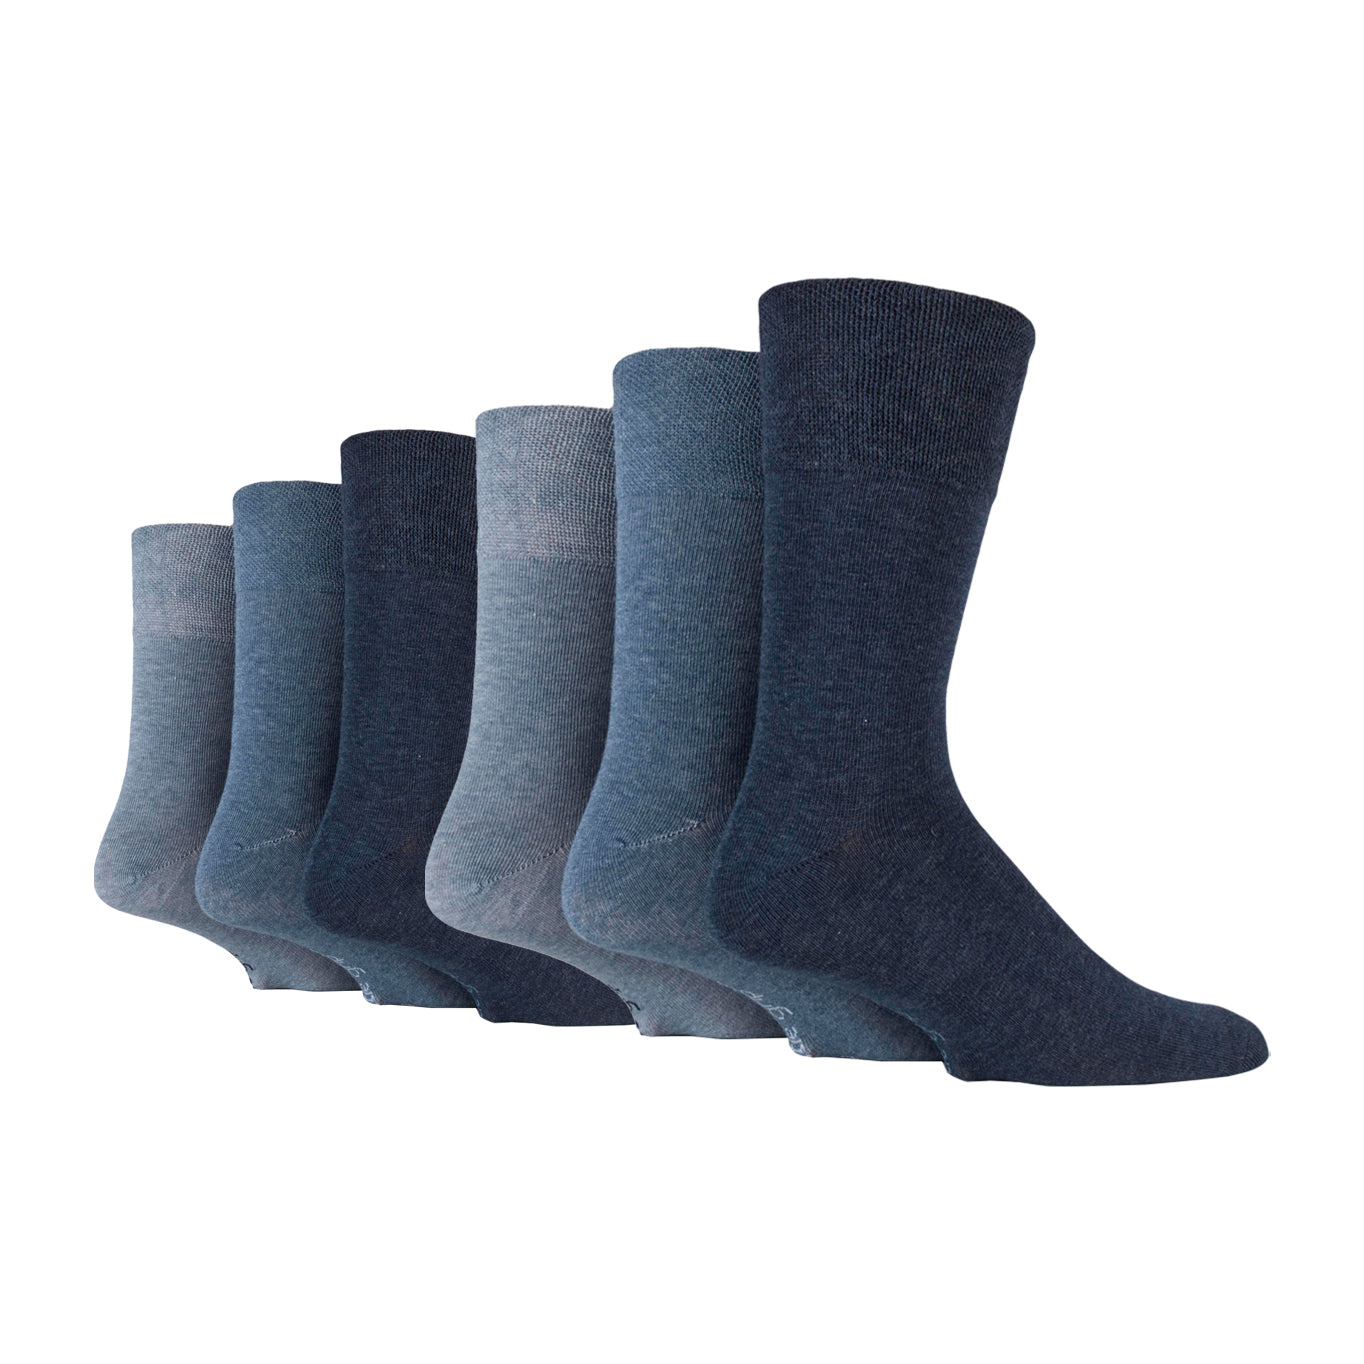 6 Pairs Men's Bigfoot Gentle Grip Cotton Socks - Blue Mix